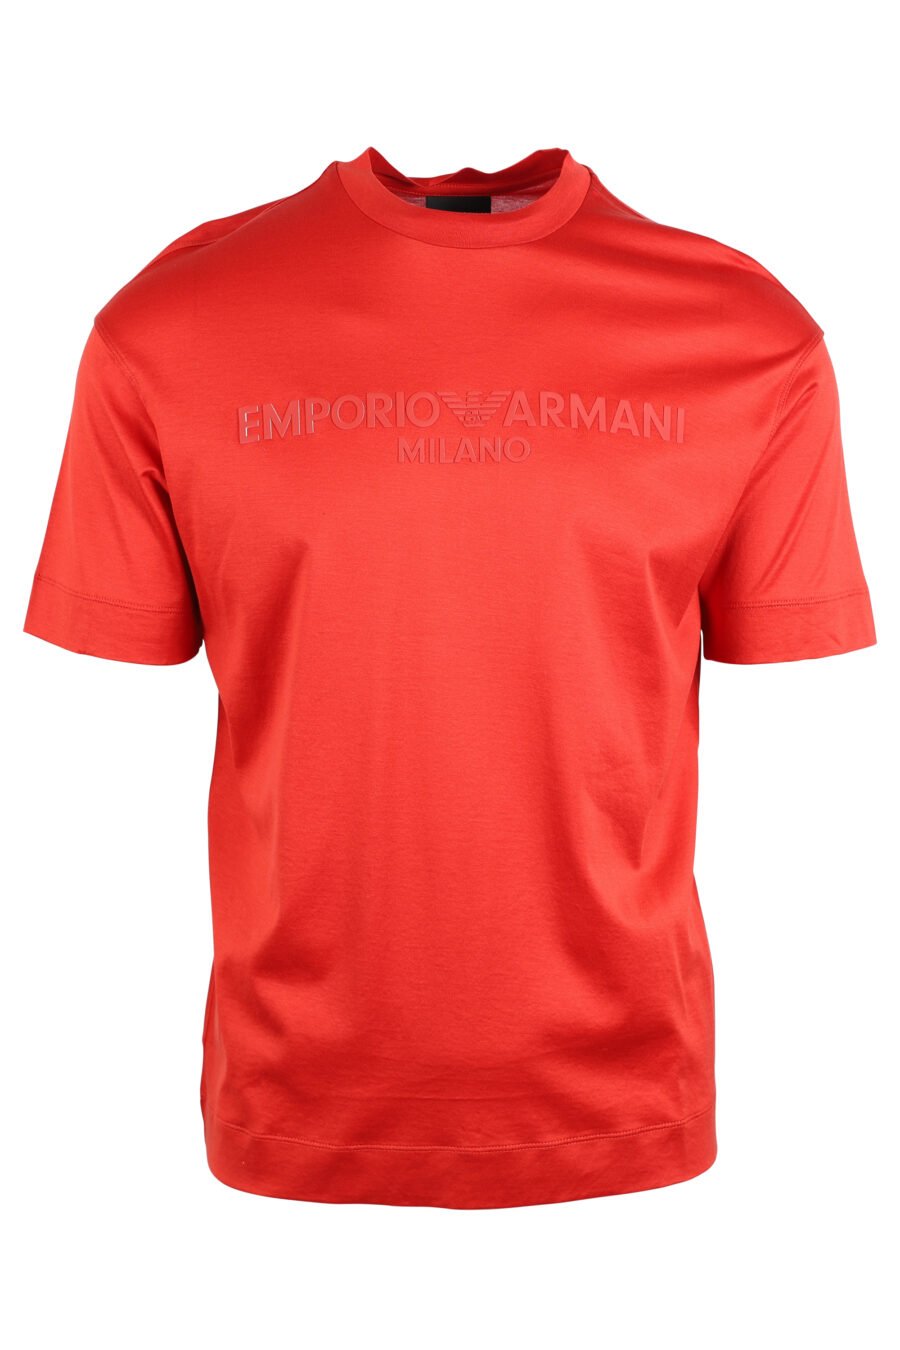 Rotes T-Shirt mit einfarbigem Maxilogo - IMG 4747